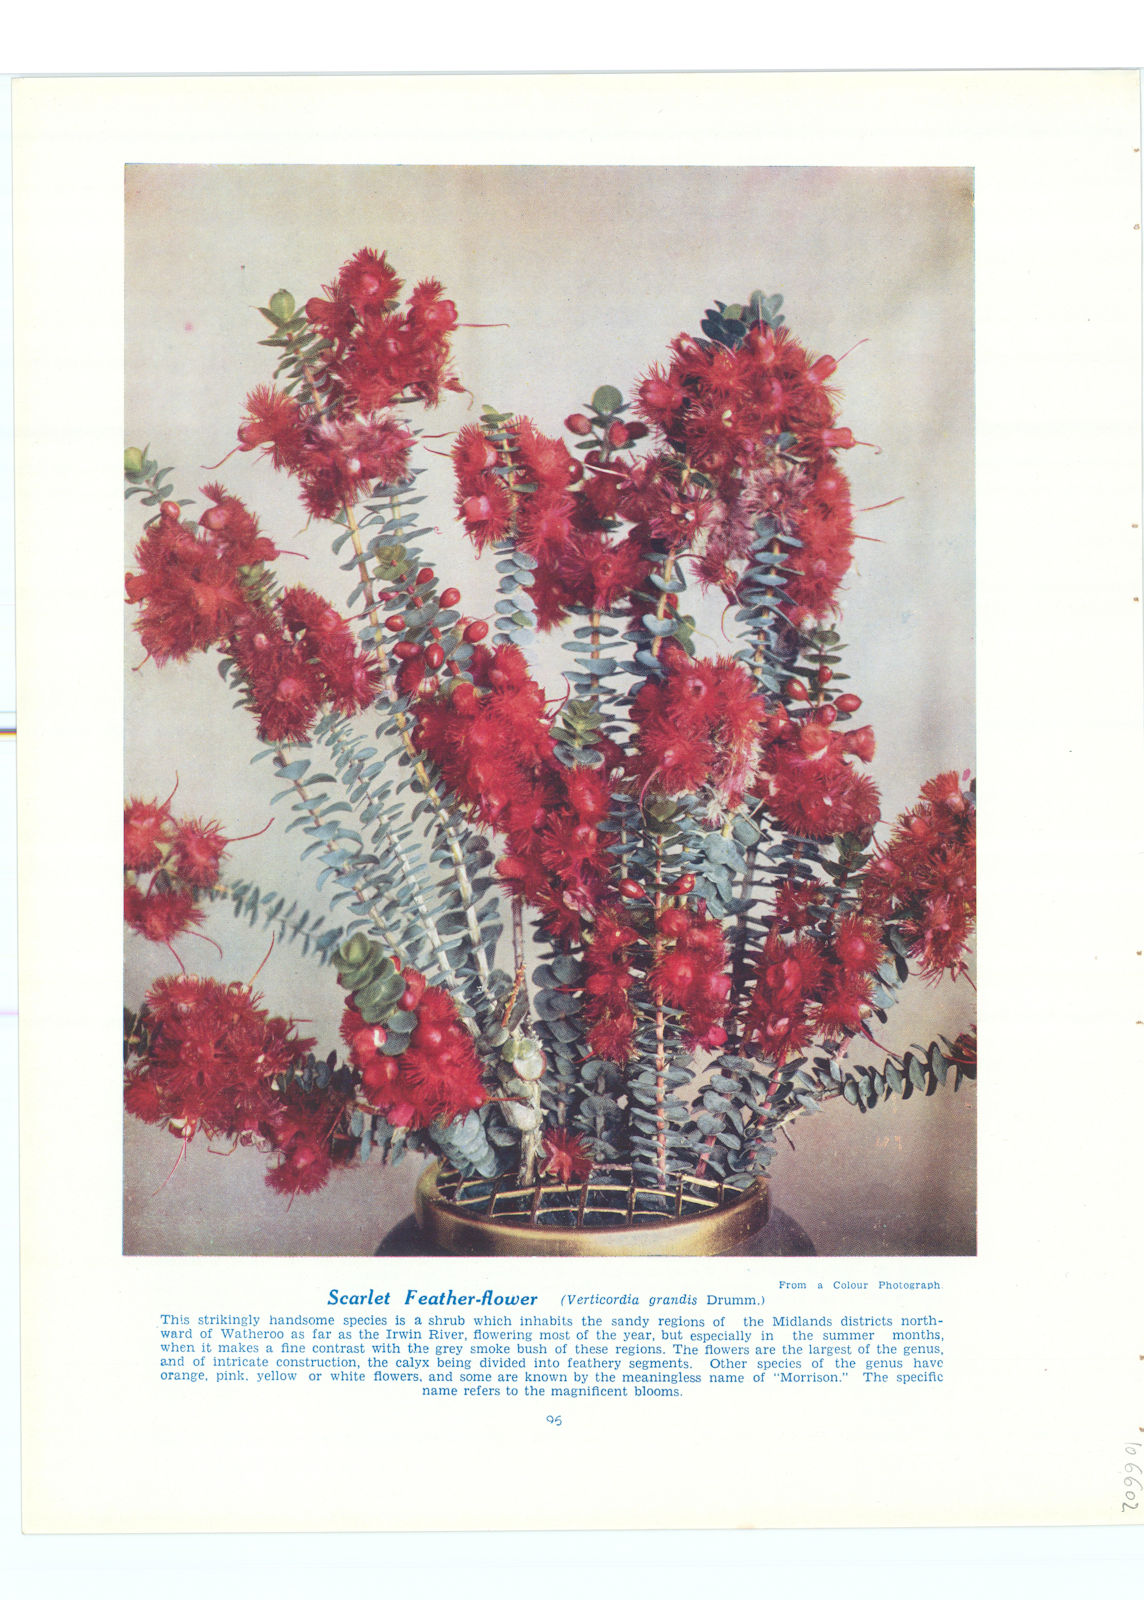 Associate Product Scarlet Feather-flower (Verticordia grandis). West Australian Wild Flowers 1950